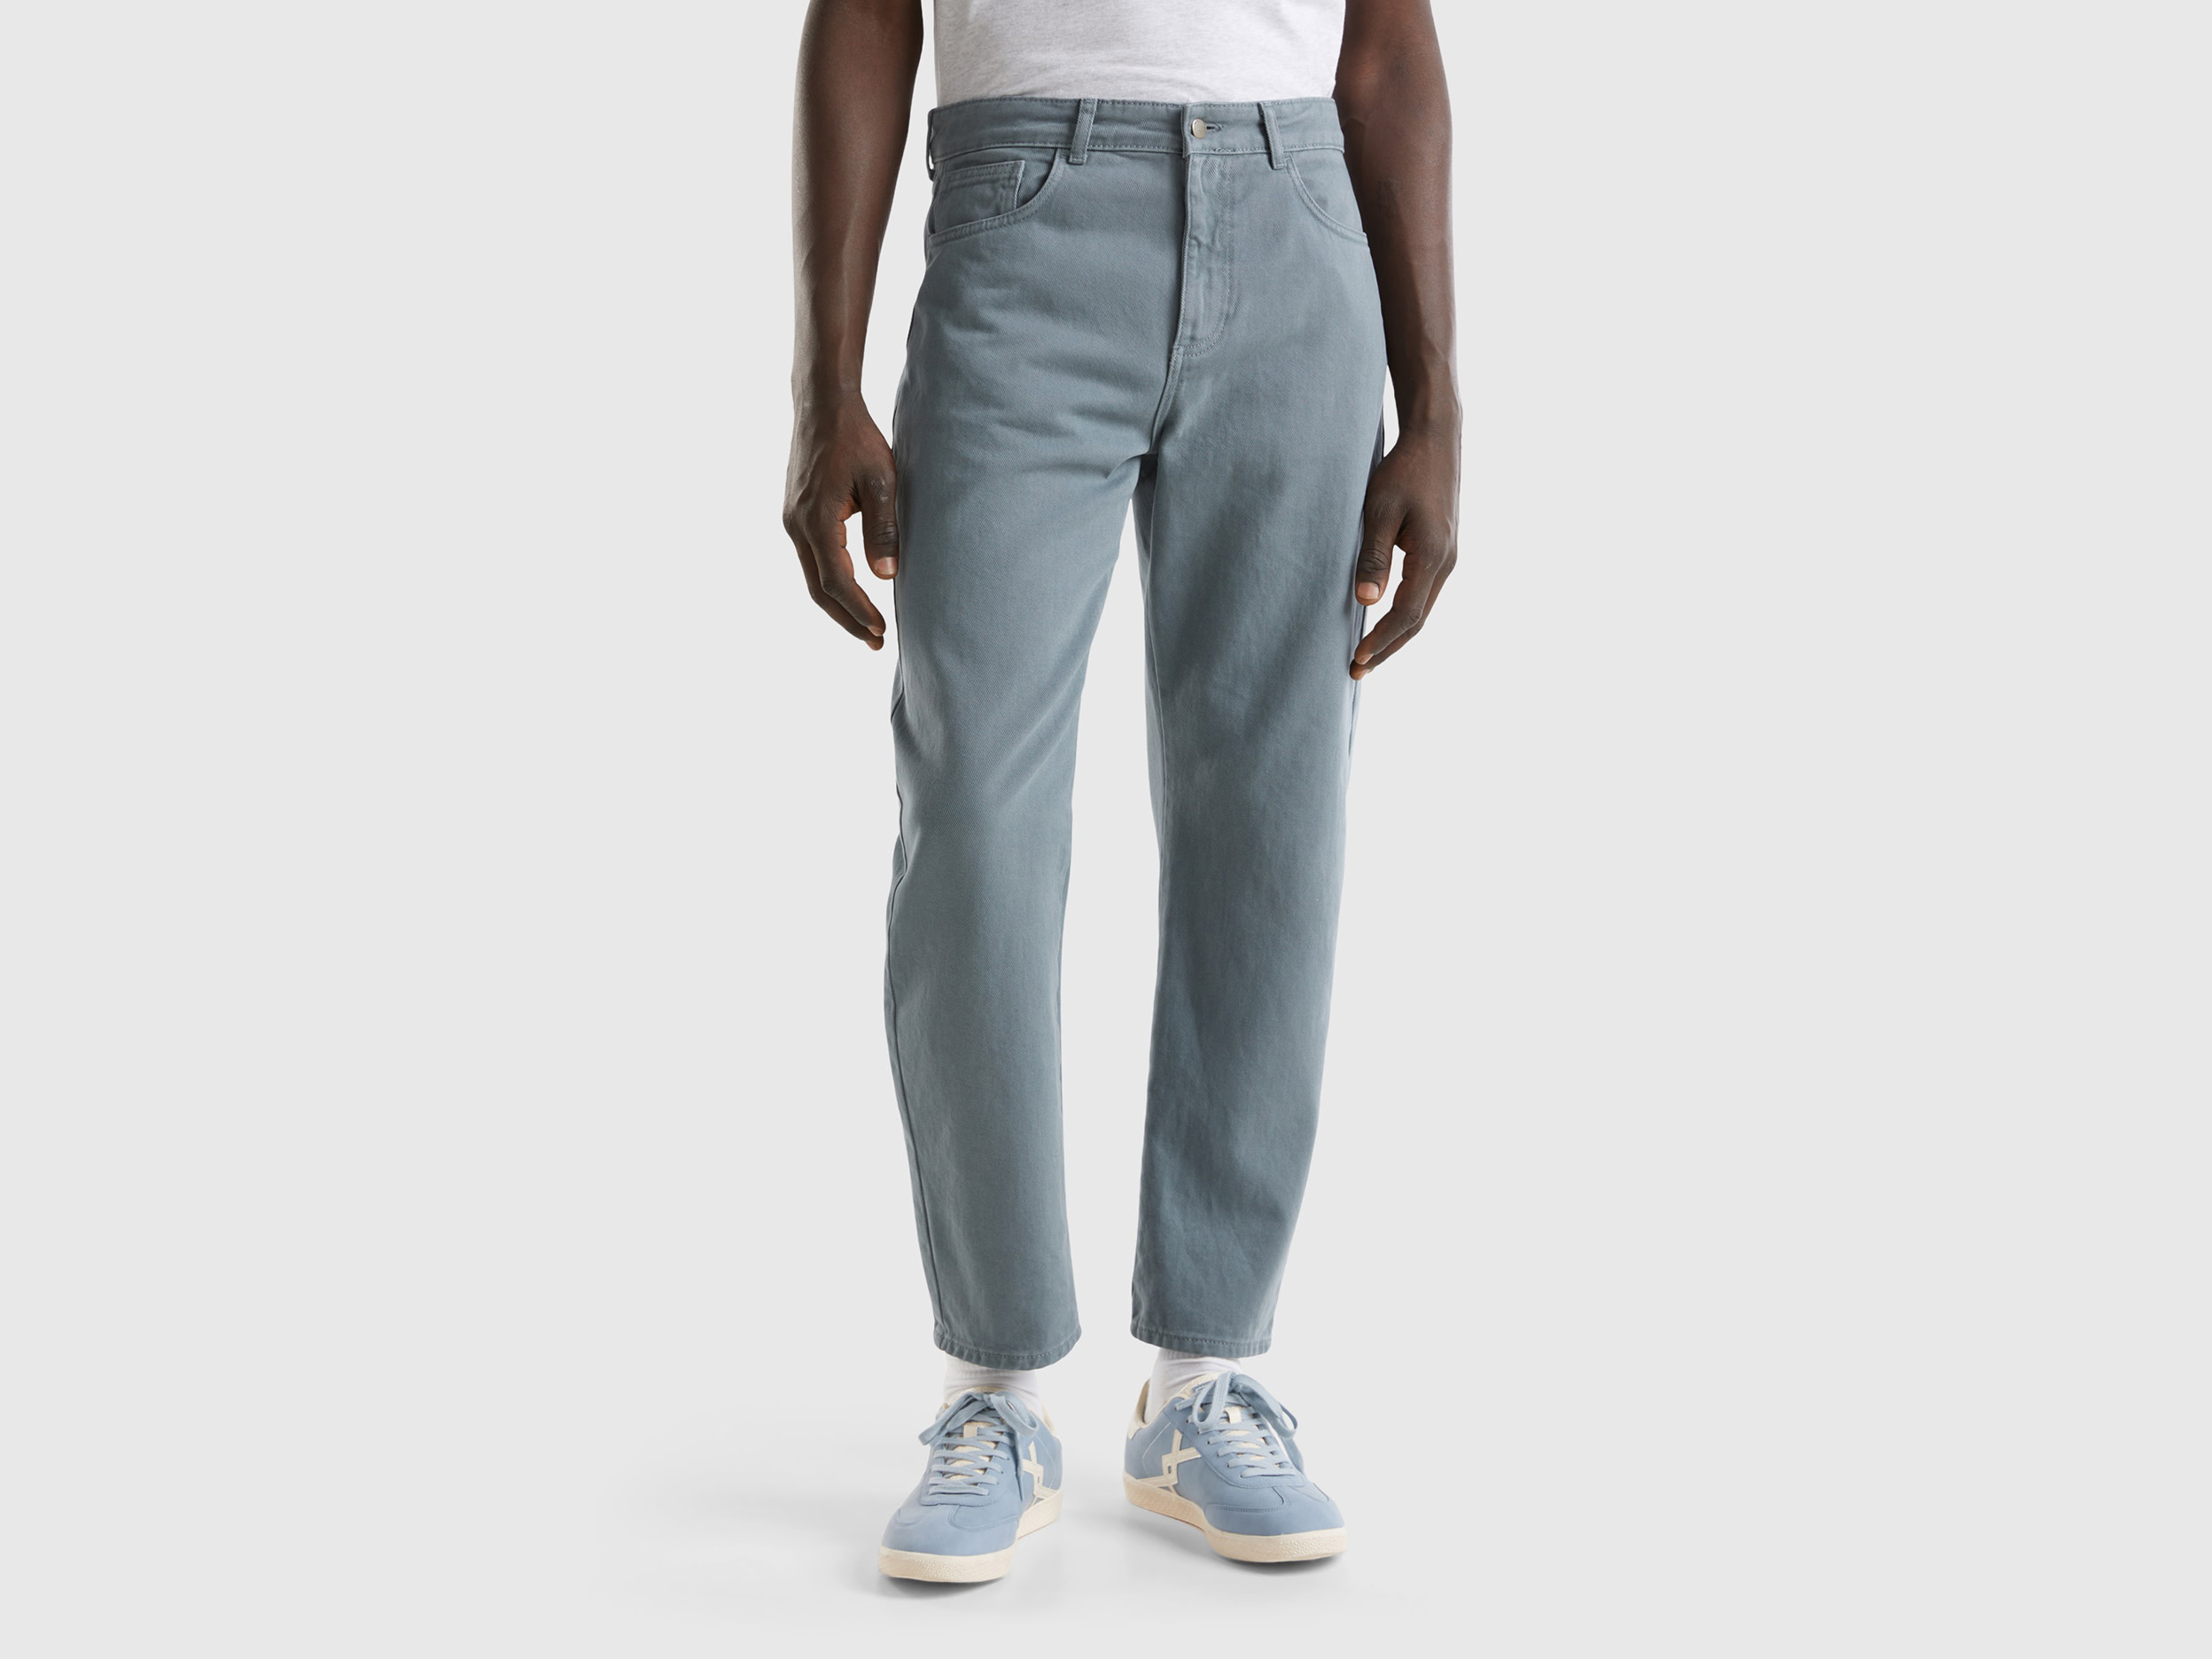 Benetton, Five Pocket Carrot Fit Trousers, size 38, Light Gray, Men